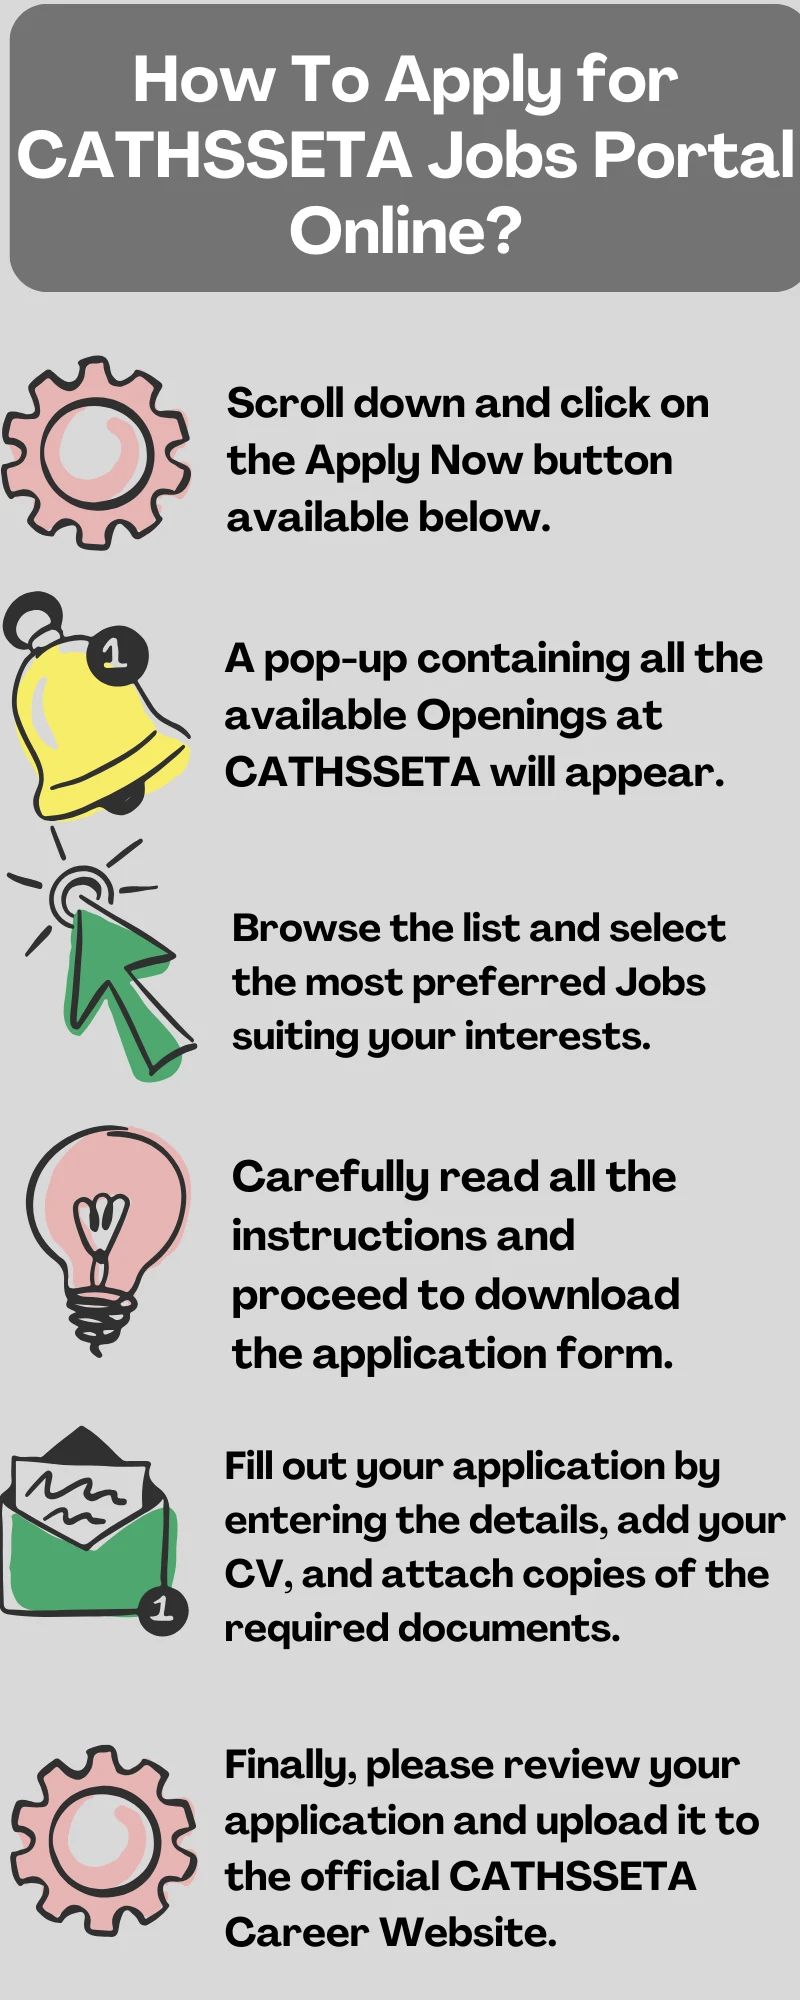 How To Apply for CATHSSETA Jobs Portal Online?